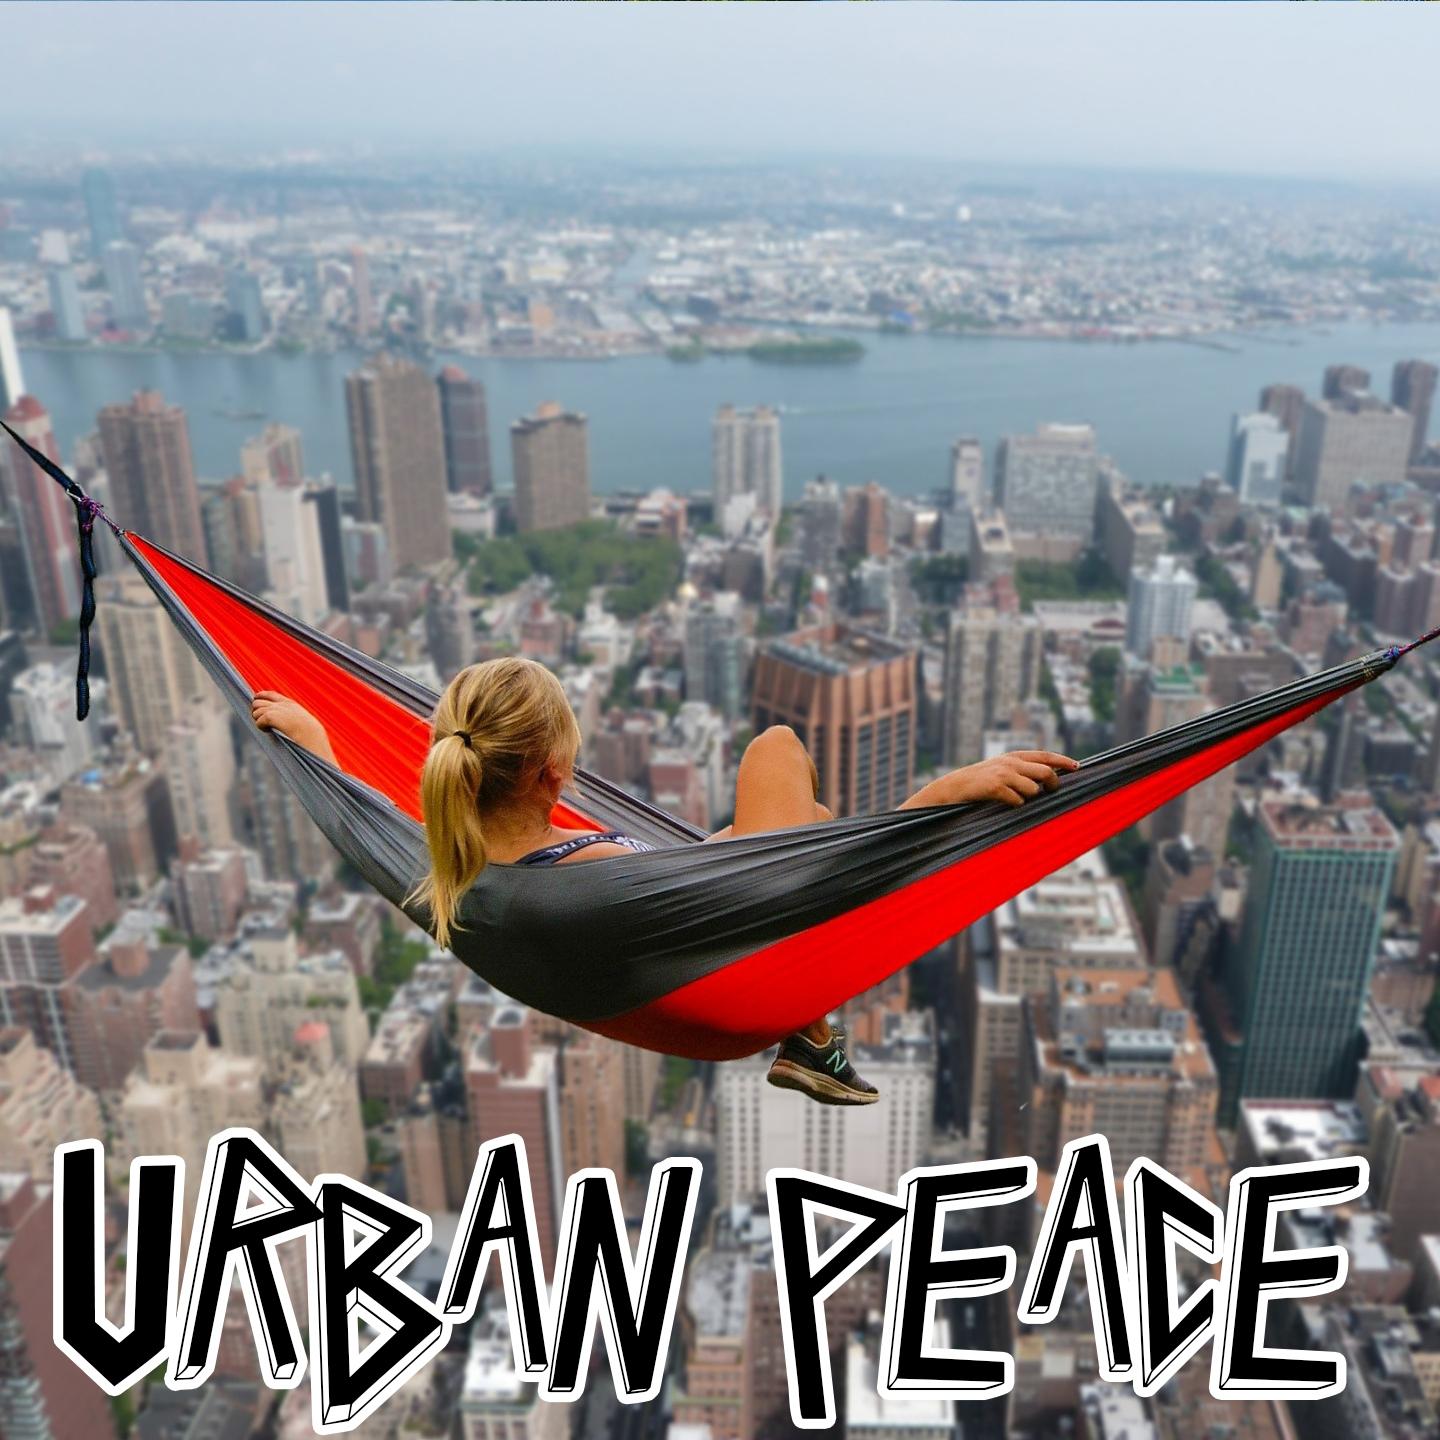 Urban Peace